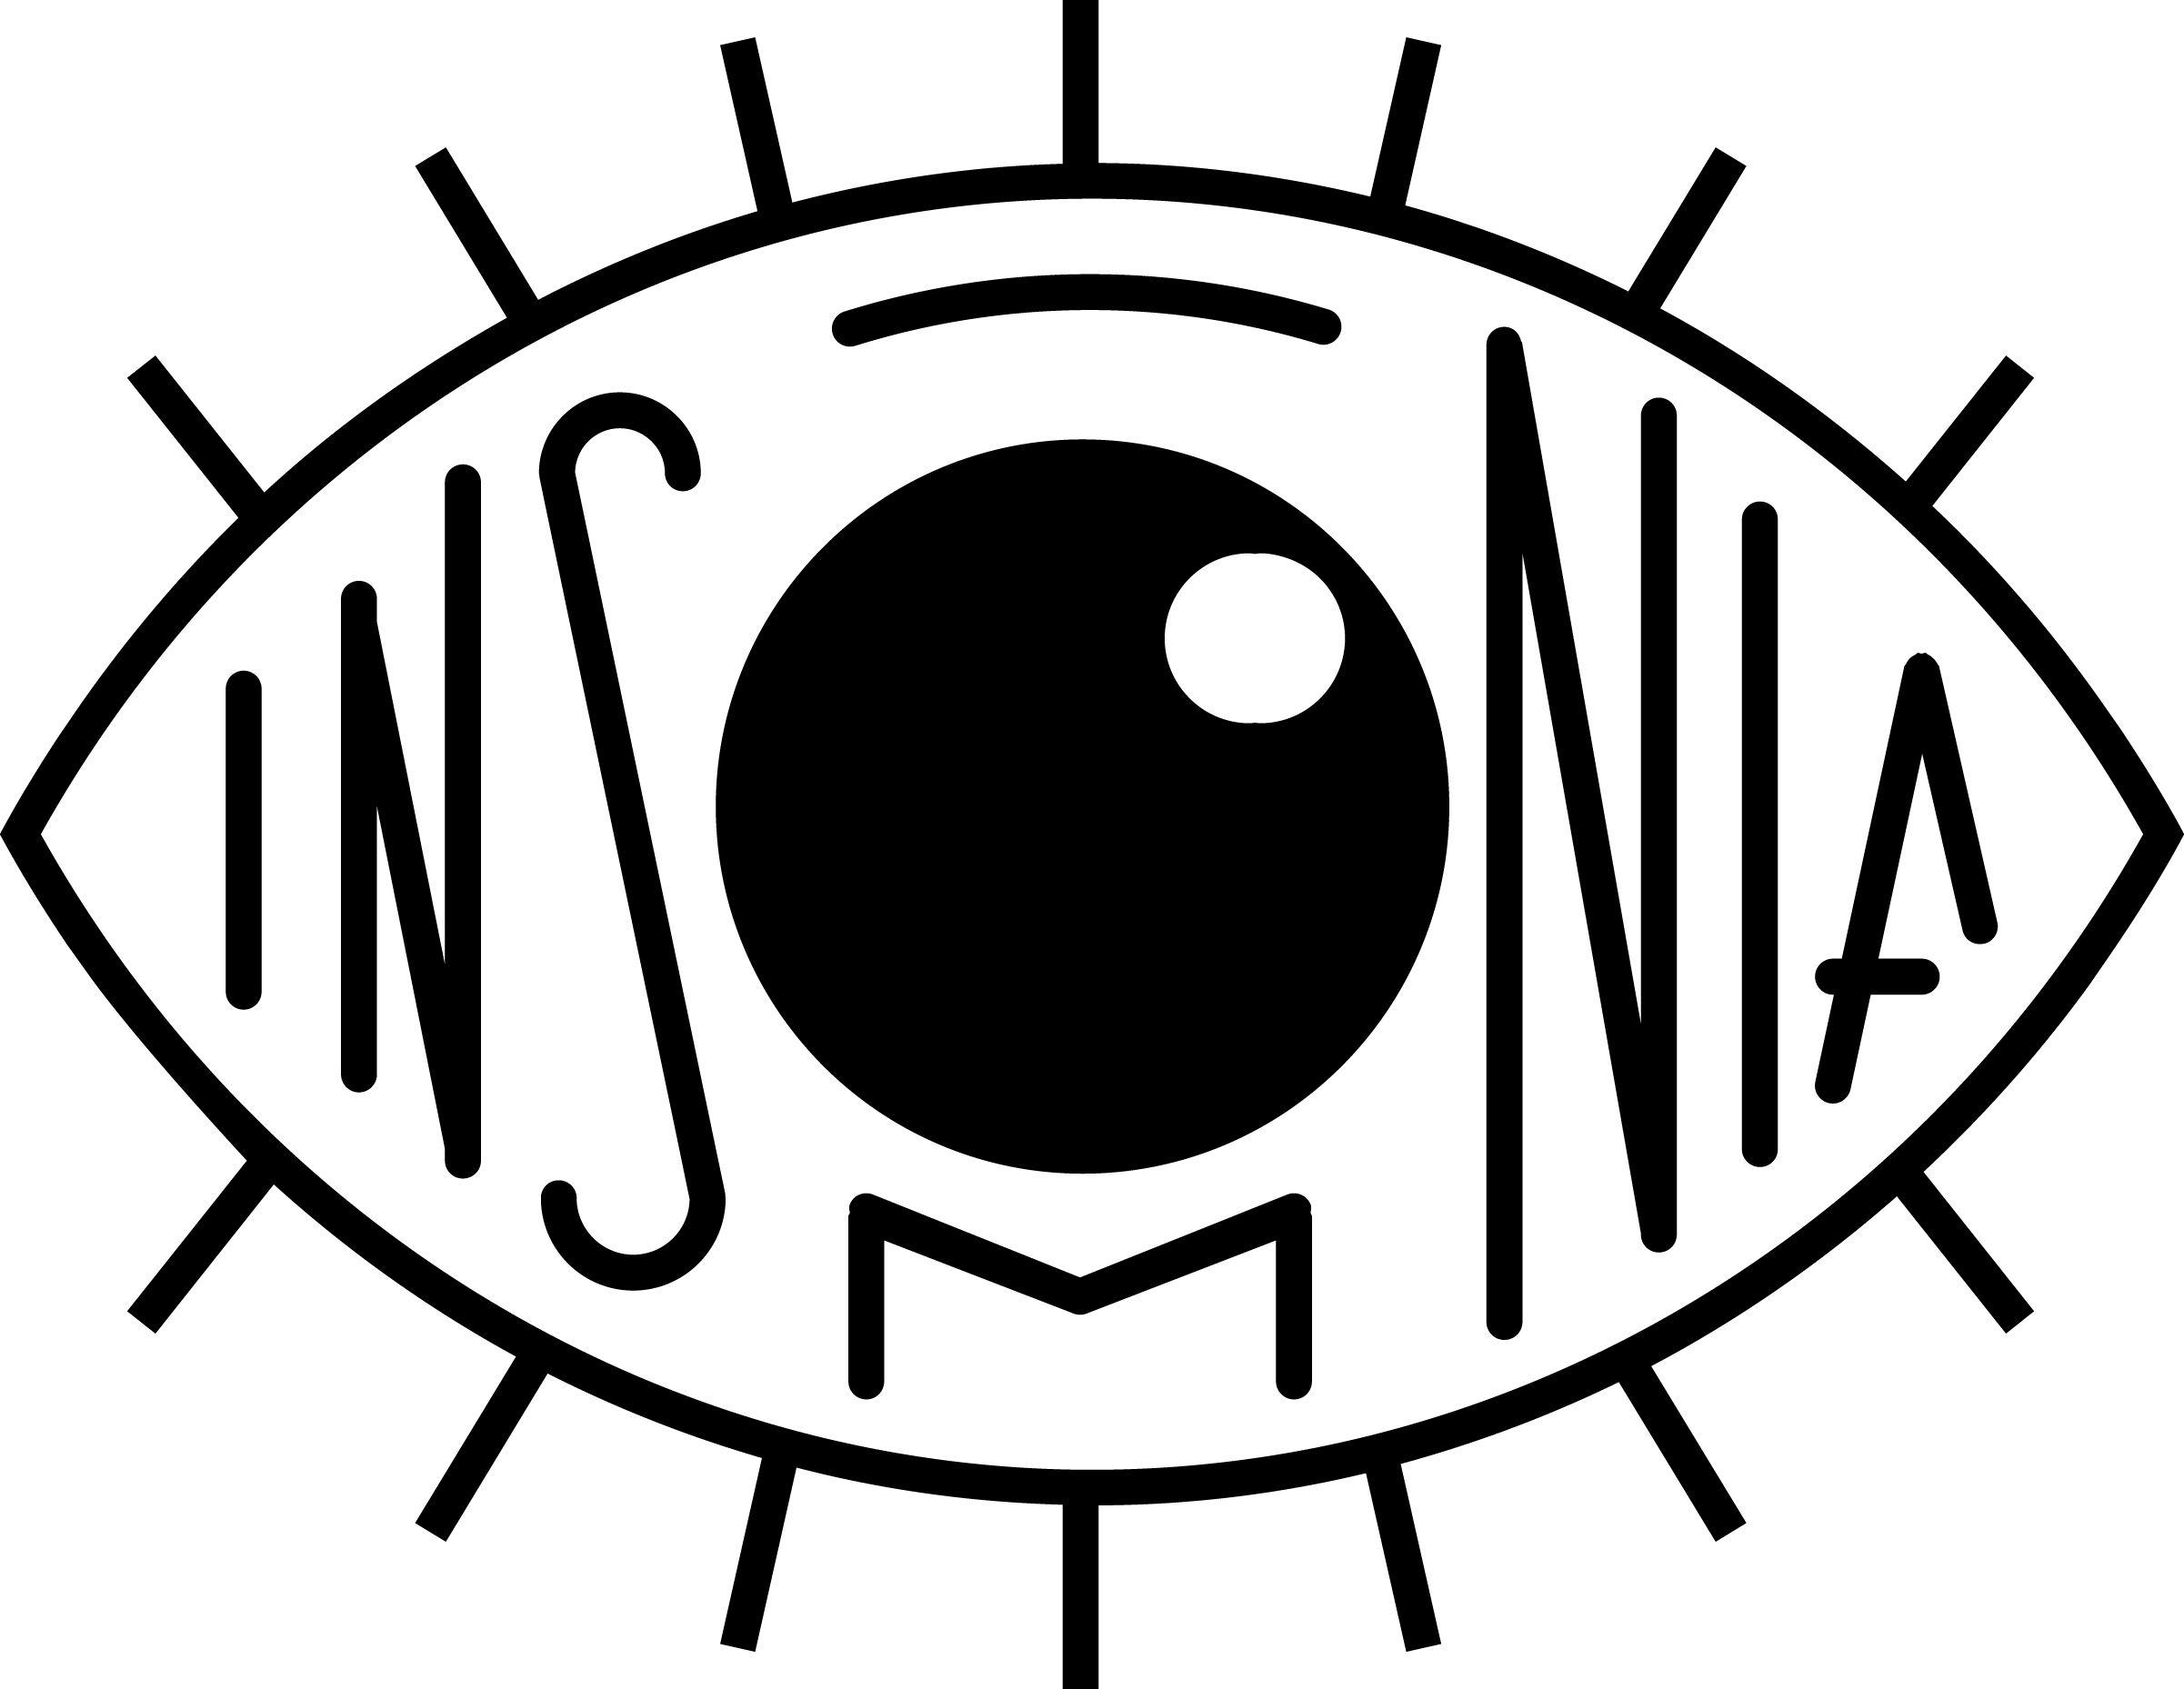 Insomnia Logo - File:INSOMNIA logo new.jpg - Wikimedia Commons